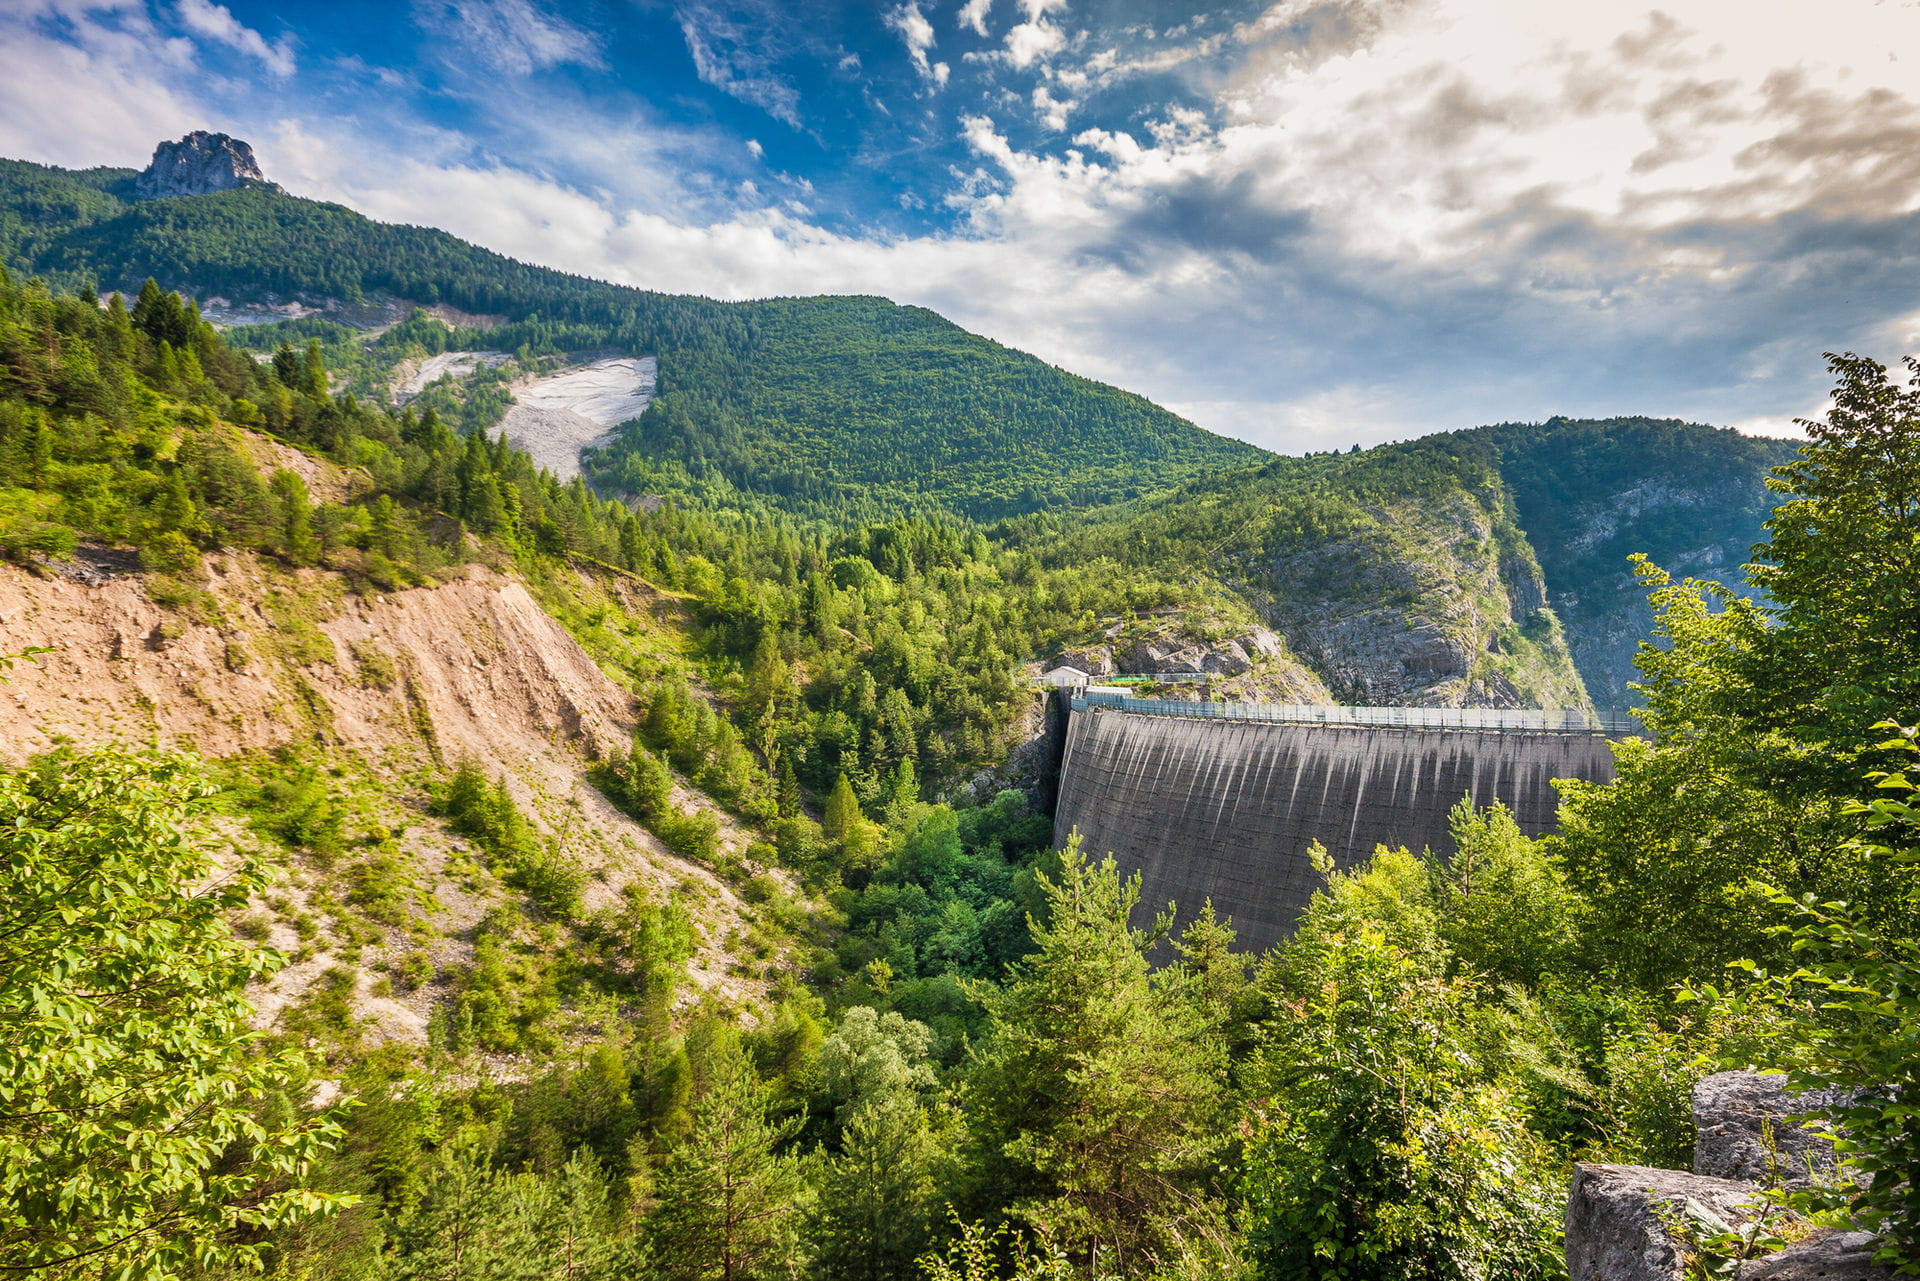 High quality hoto of Vajont Dam - Italy